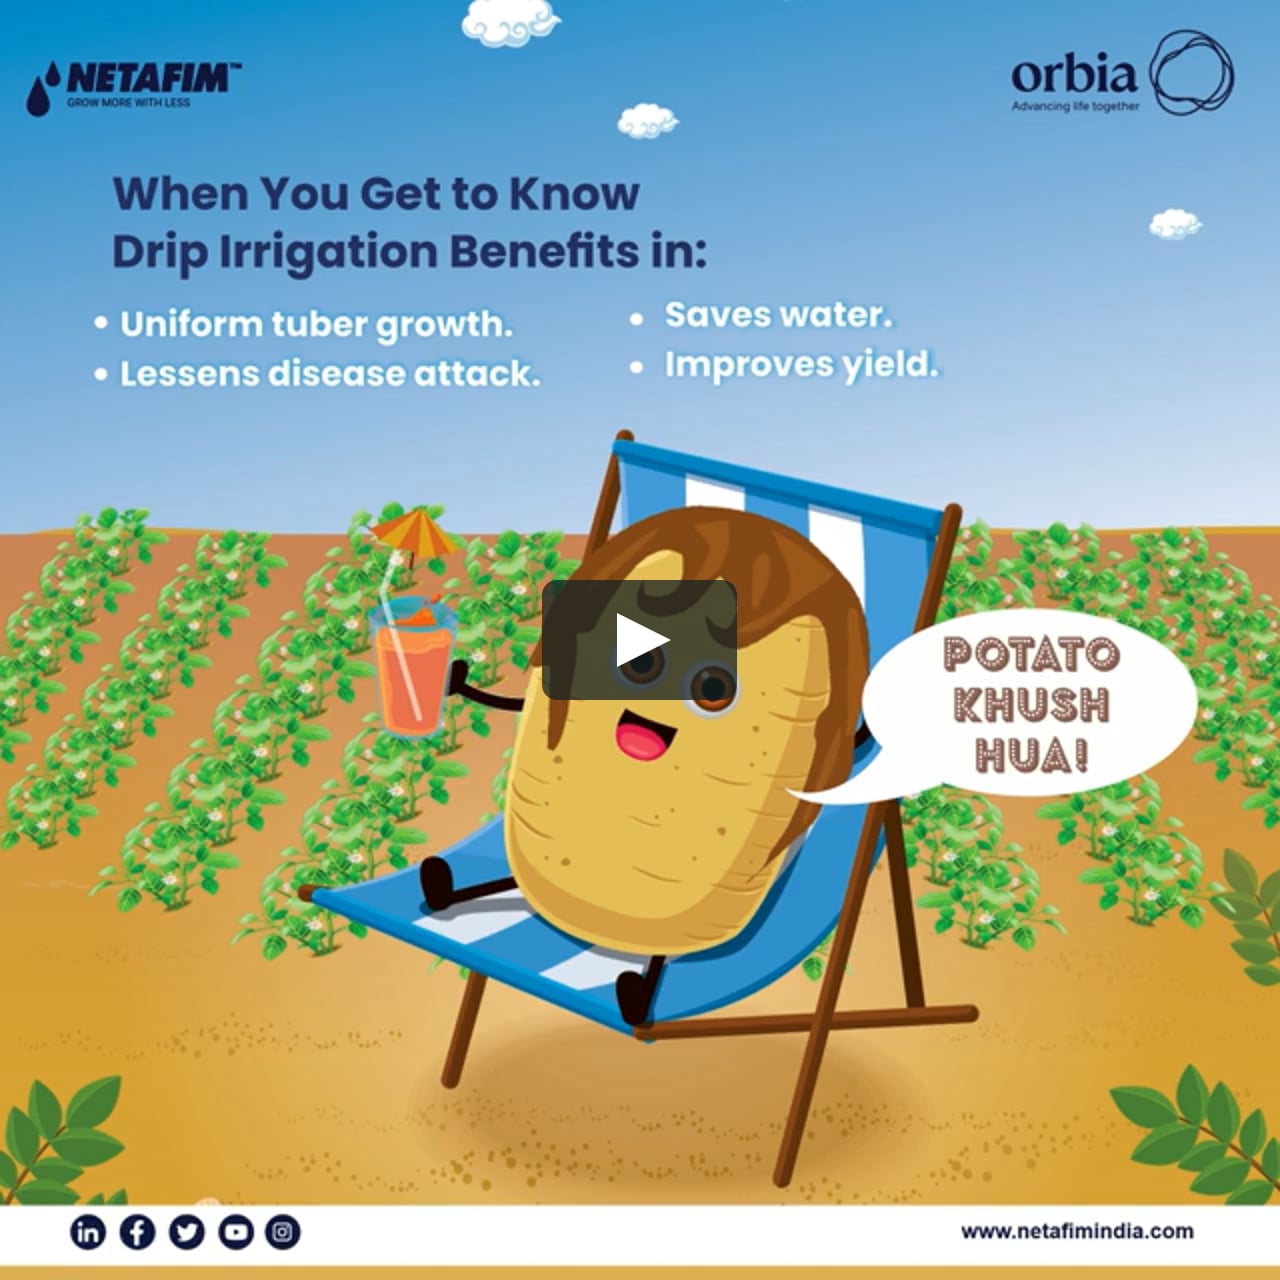 Drip Irrigation For Potato Farming on Vimeo